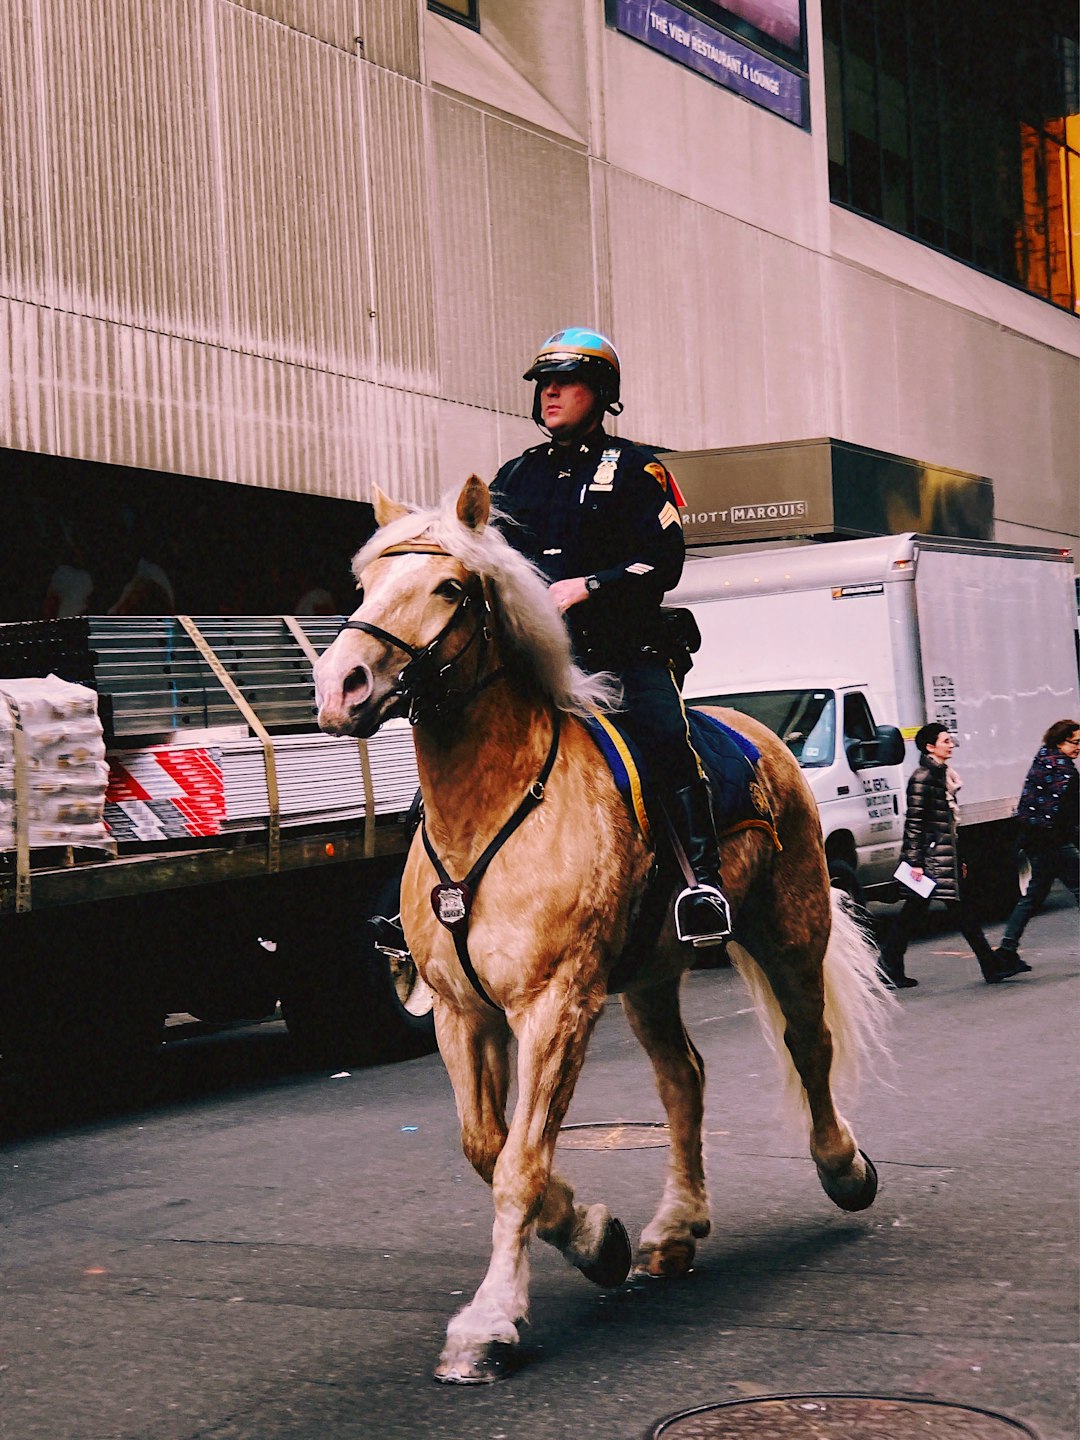 man riding brown horse on street